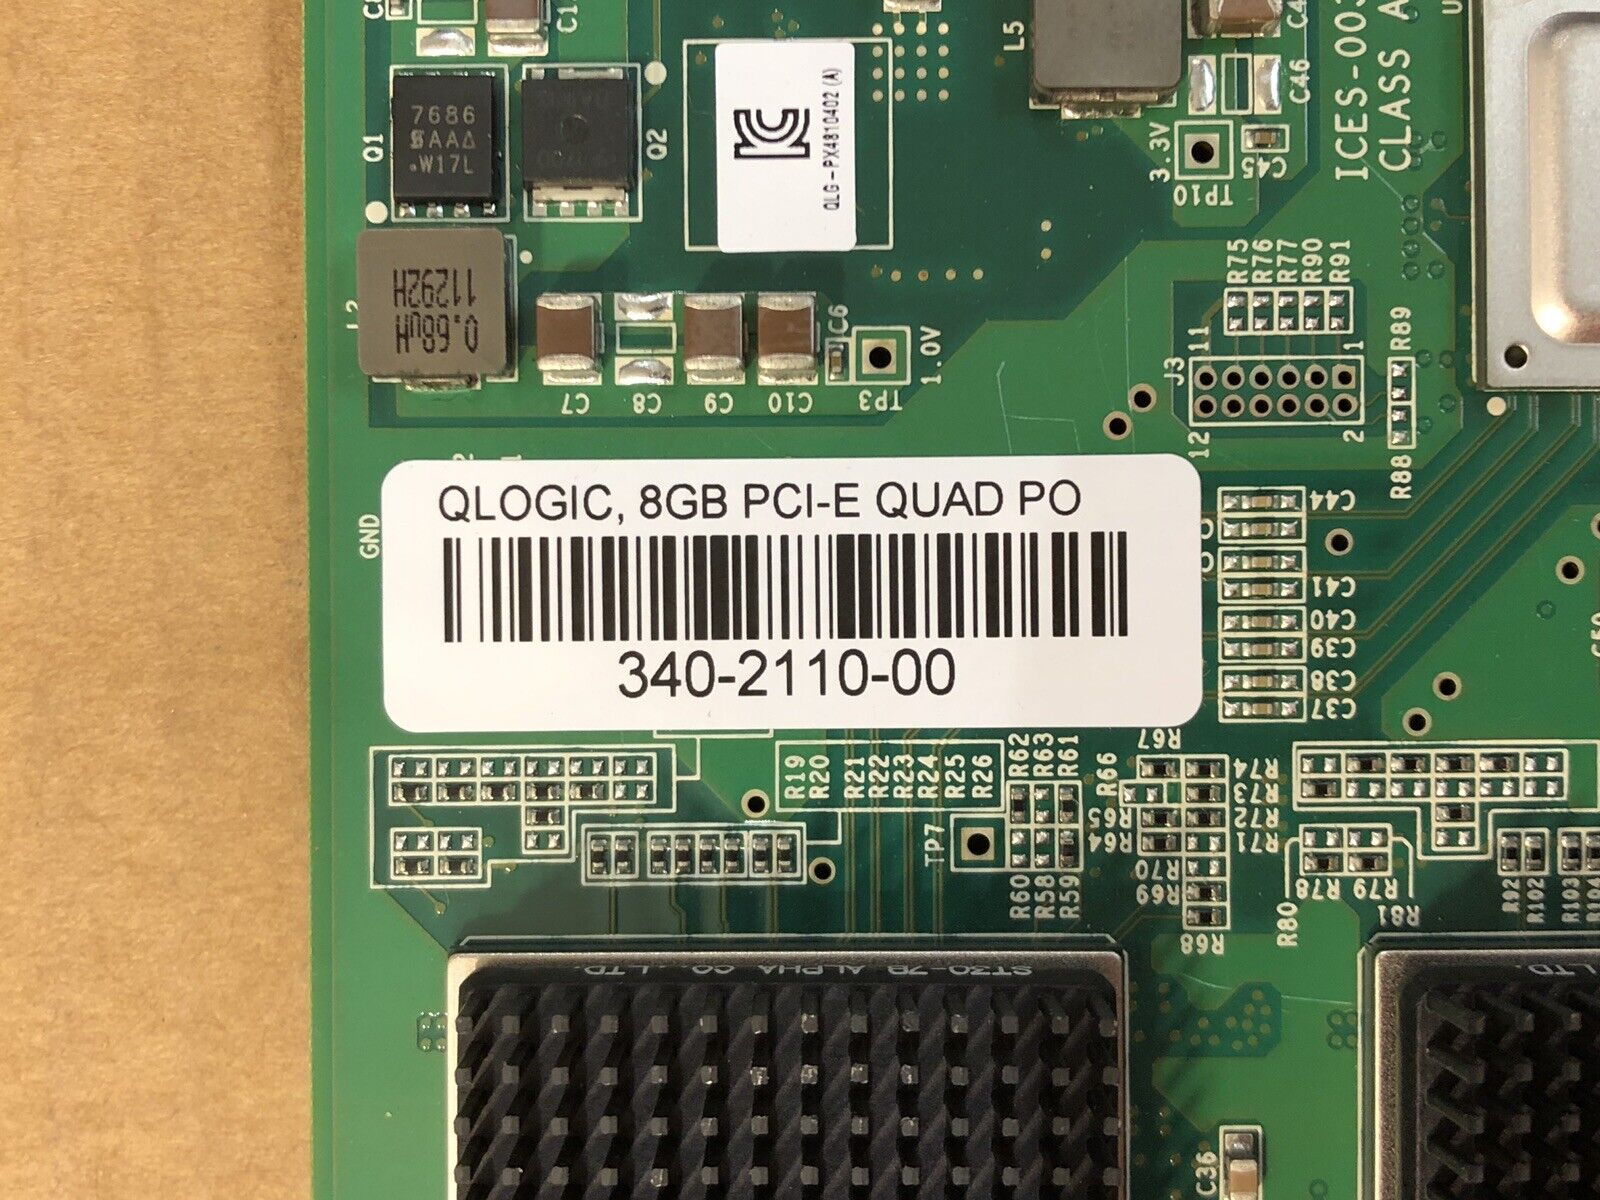 QLogic QLE2564 Quad Port FC HBA PCI-E 4 Port + 4x 8Gb Transceivers Fiber Channel  340-2110-00.